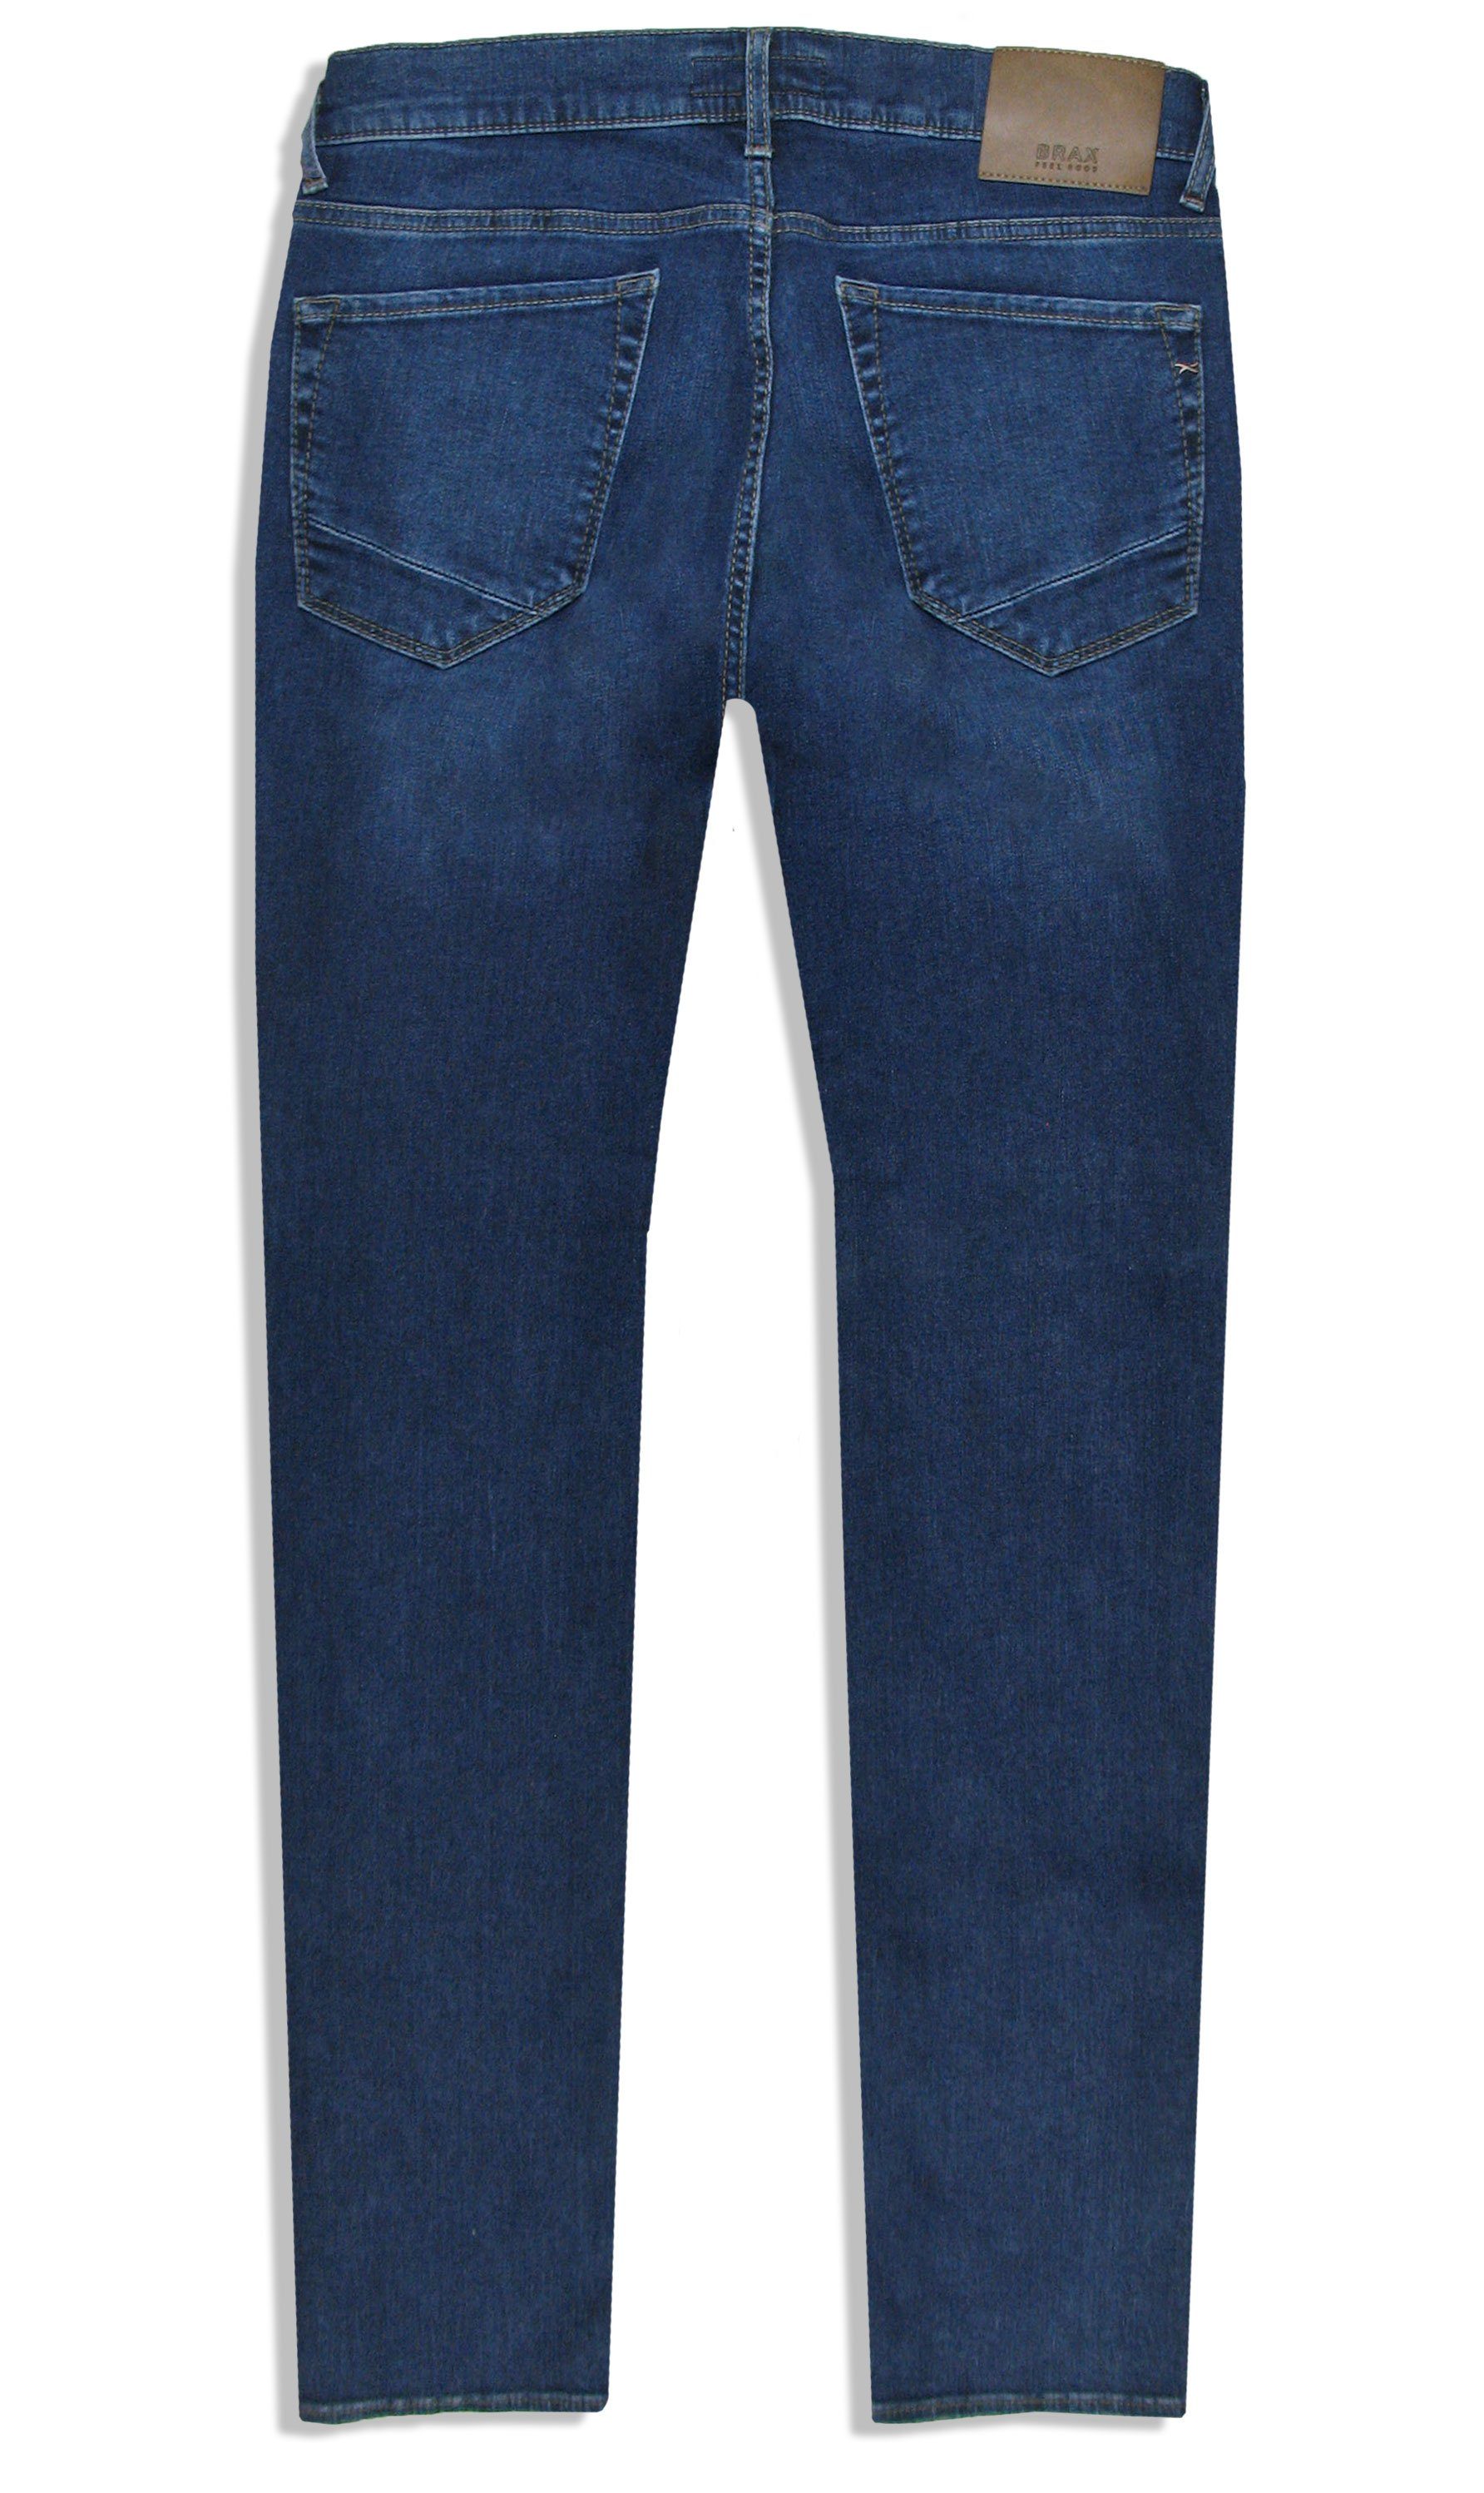 5-Pocket-Jeans Gallery Brax Flex Blue Denim Used Ocean Chuck